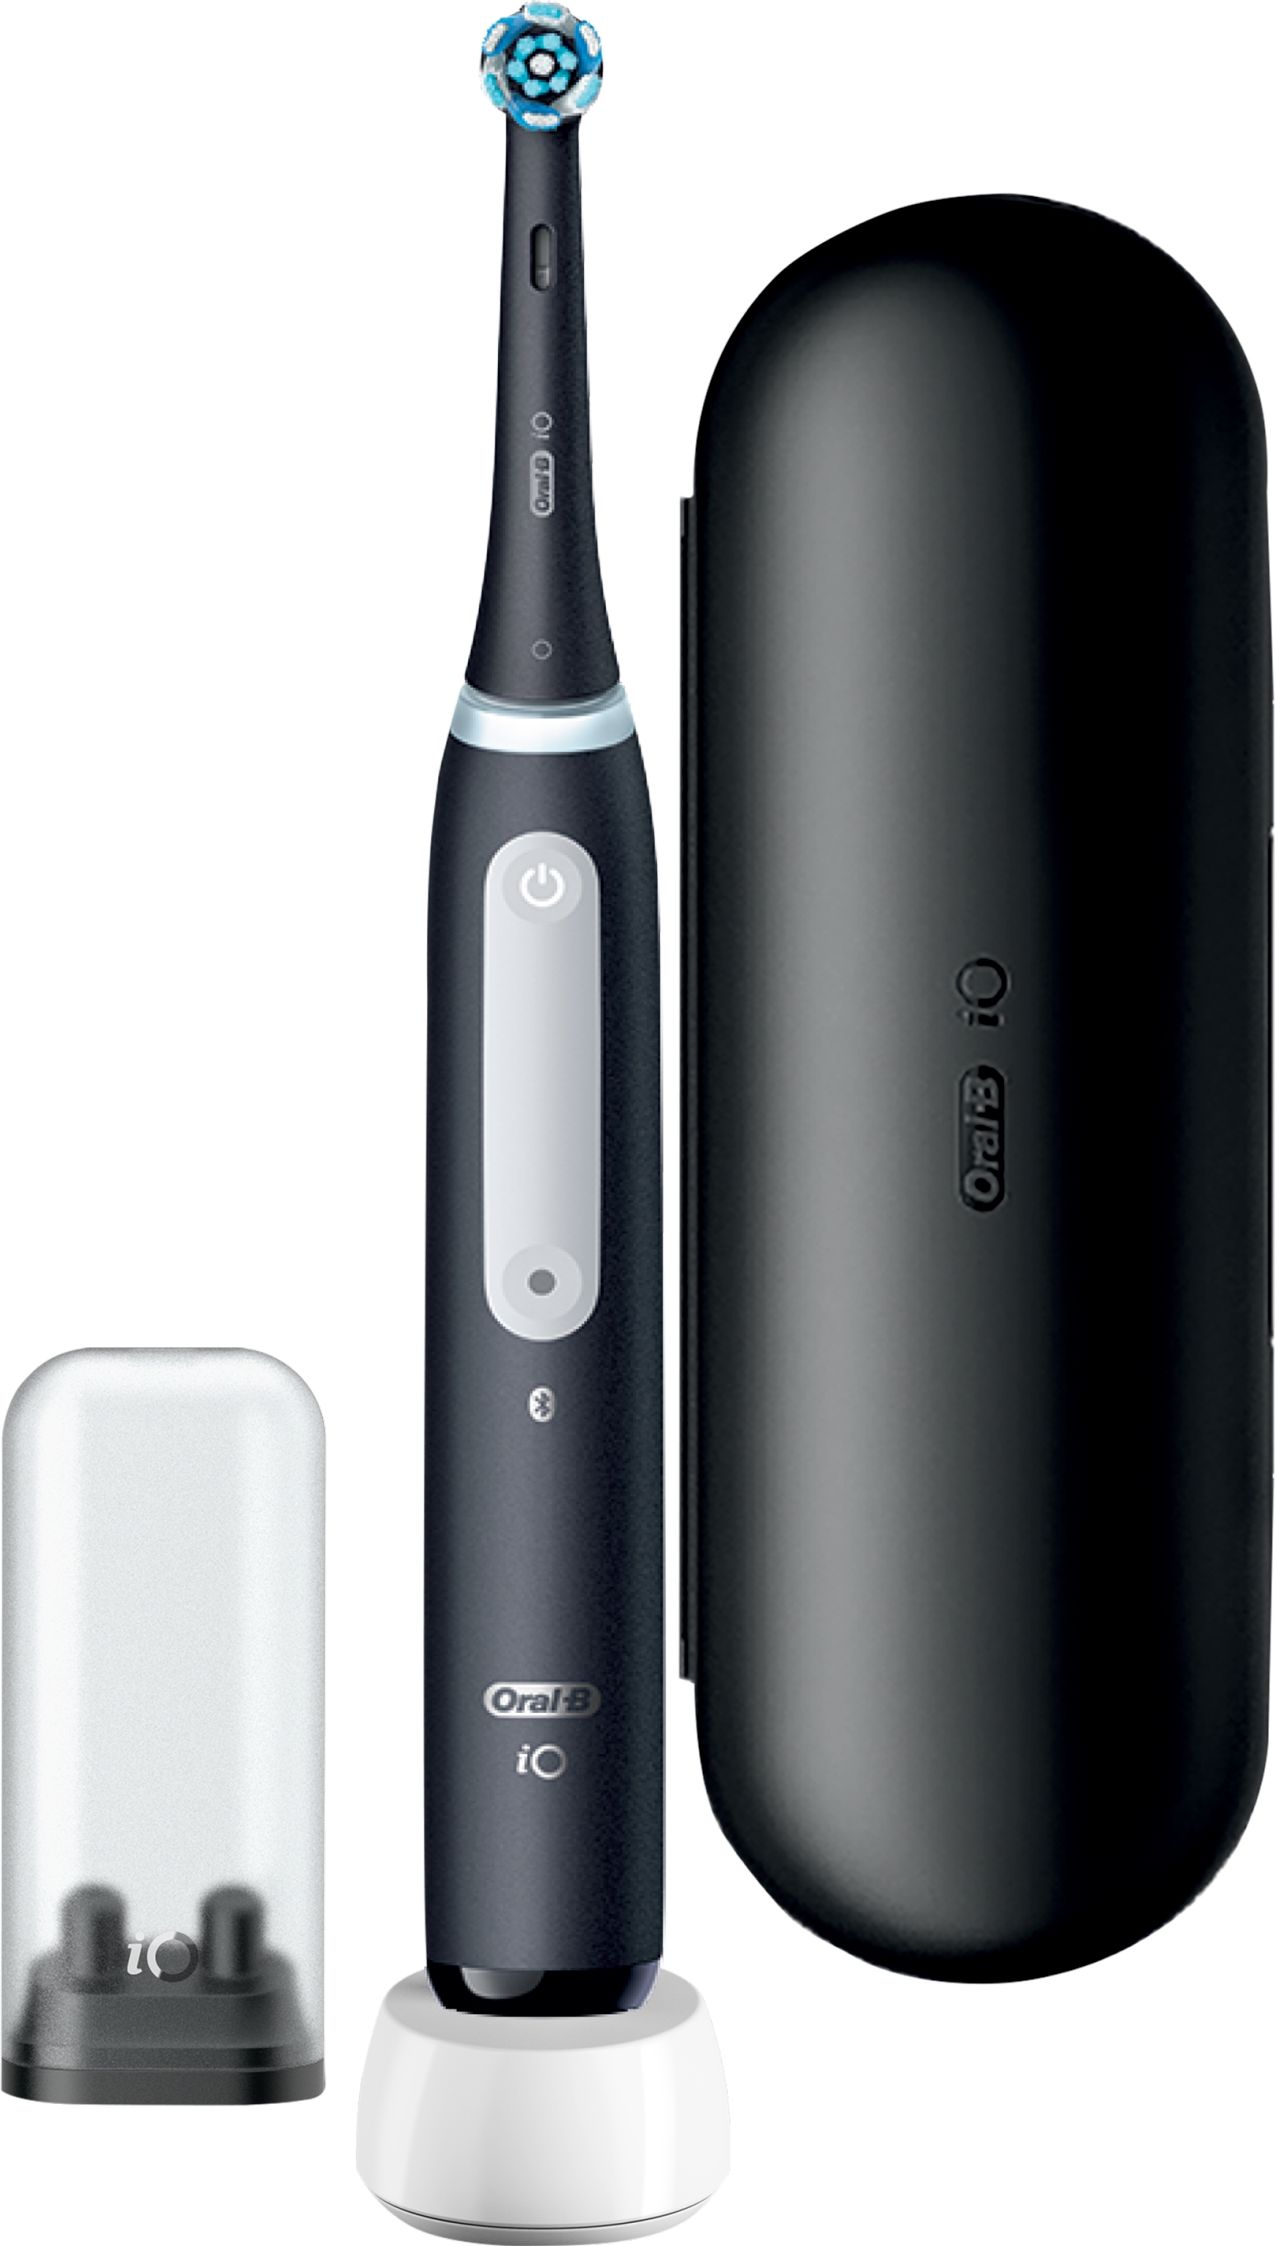 Oral B iO 4 Electric Toothbrush - Black, Black